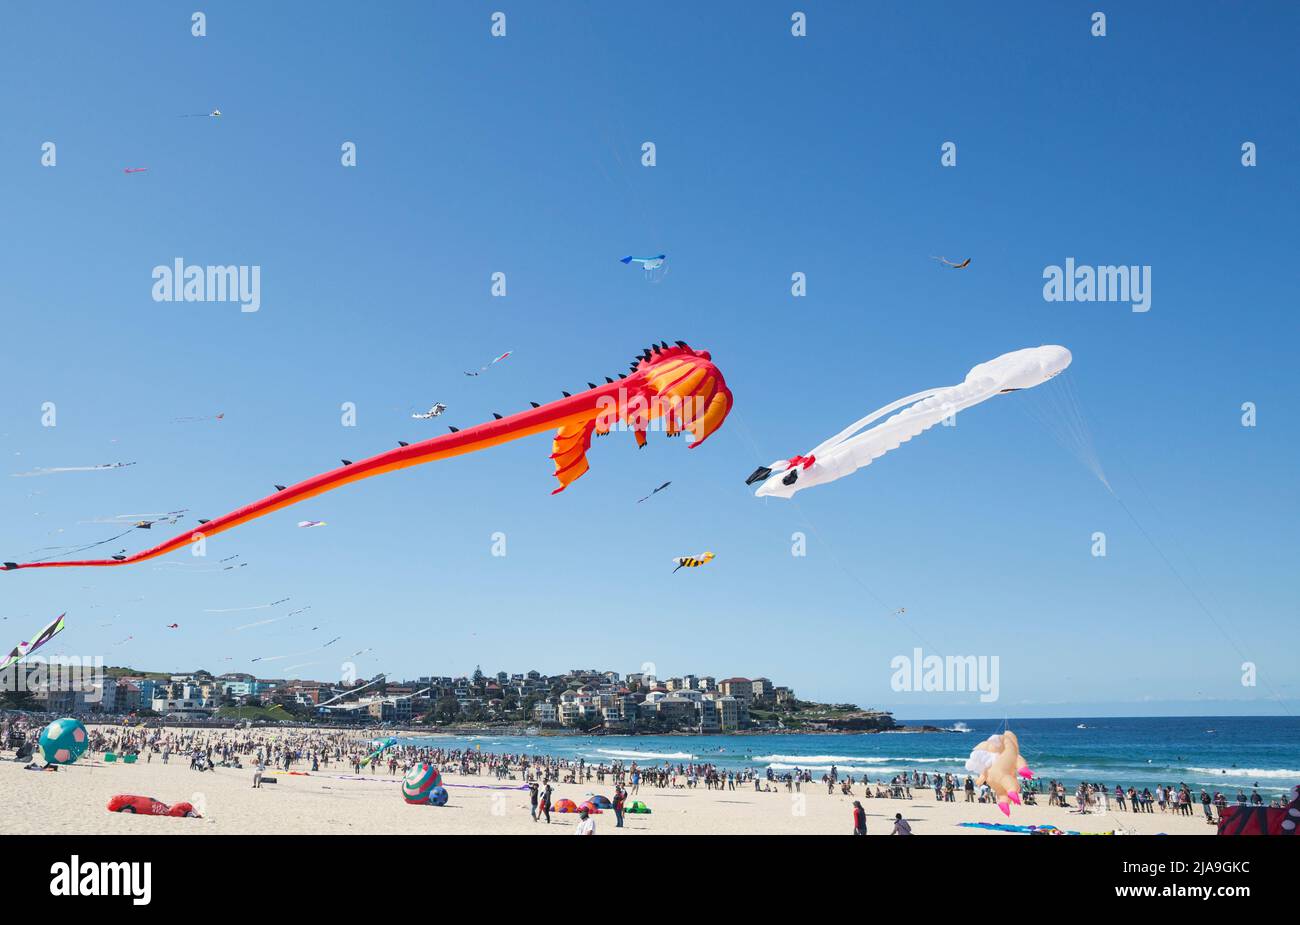 Festival of the Winds, Bondi Beach, Sydney. Kite flying festival. Stock Photo